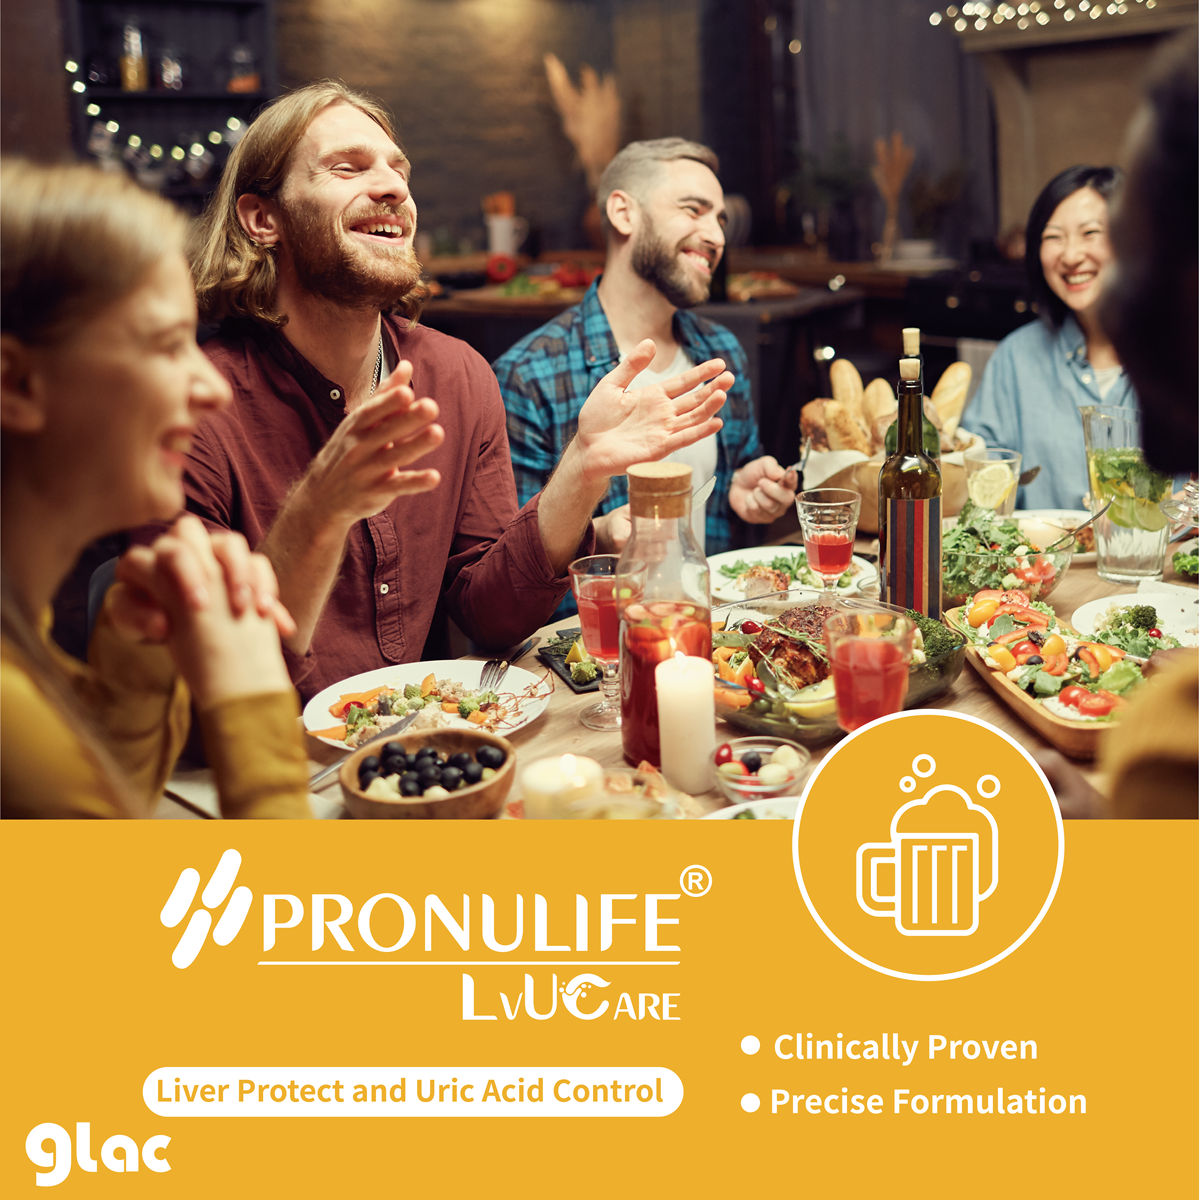 PRONULIFE®LvUCare-Uric Acid Management and Liver Care Probiotics